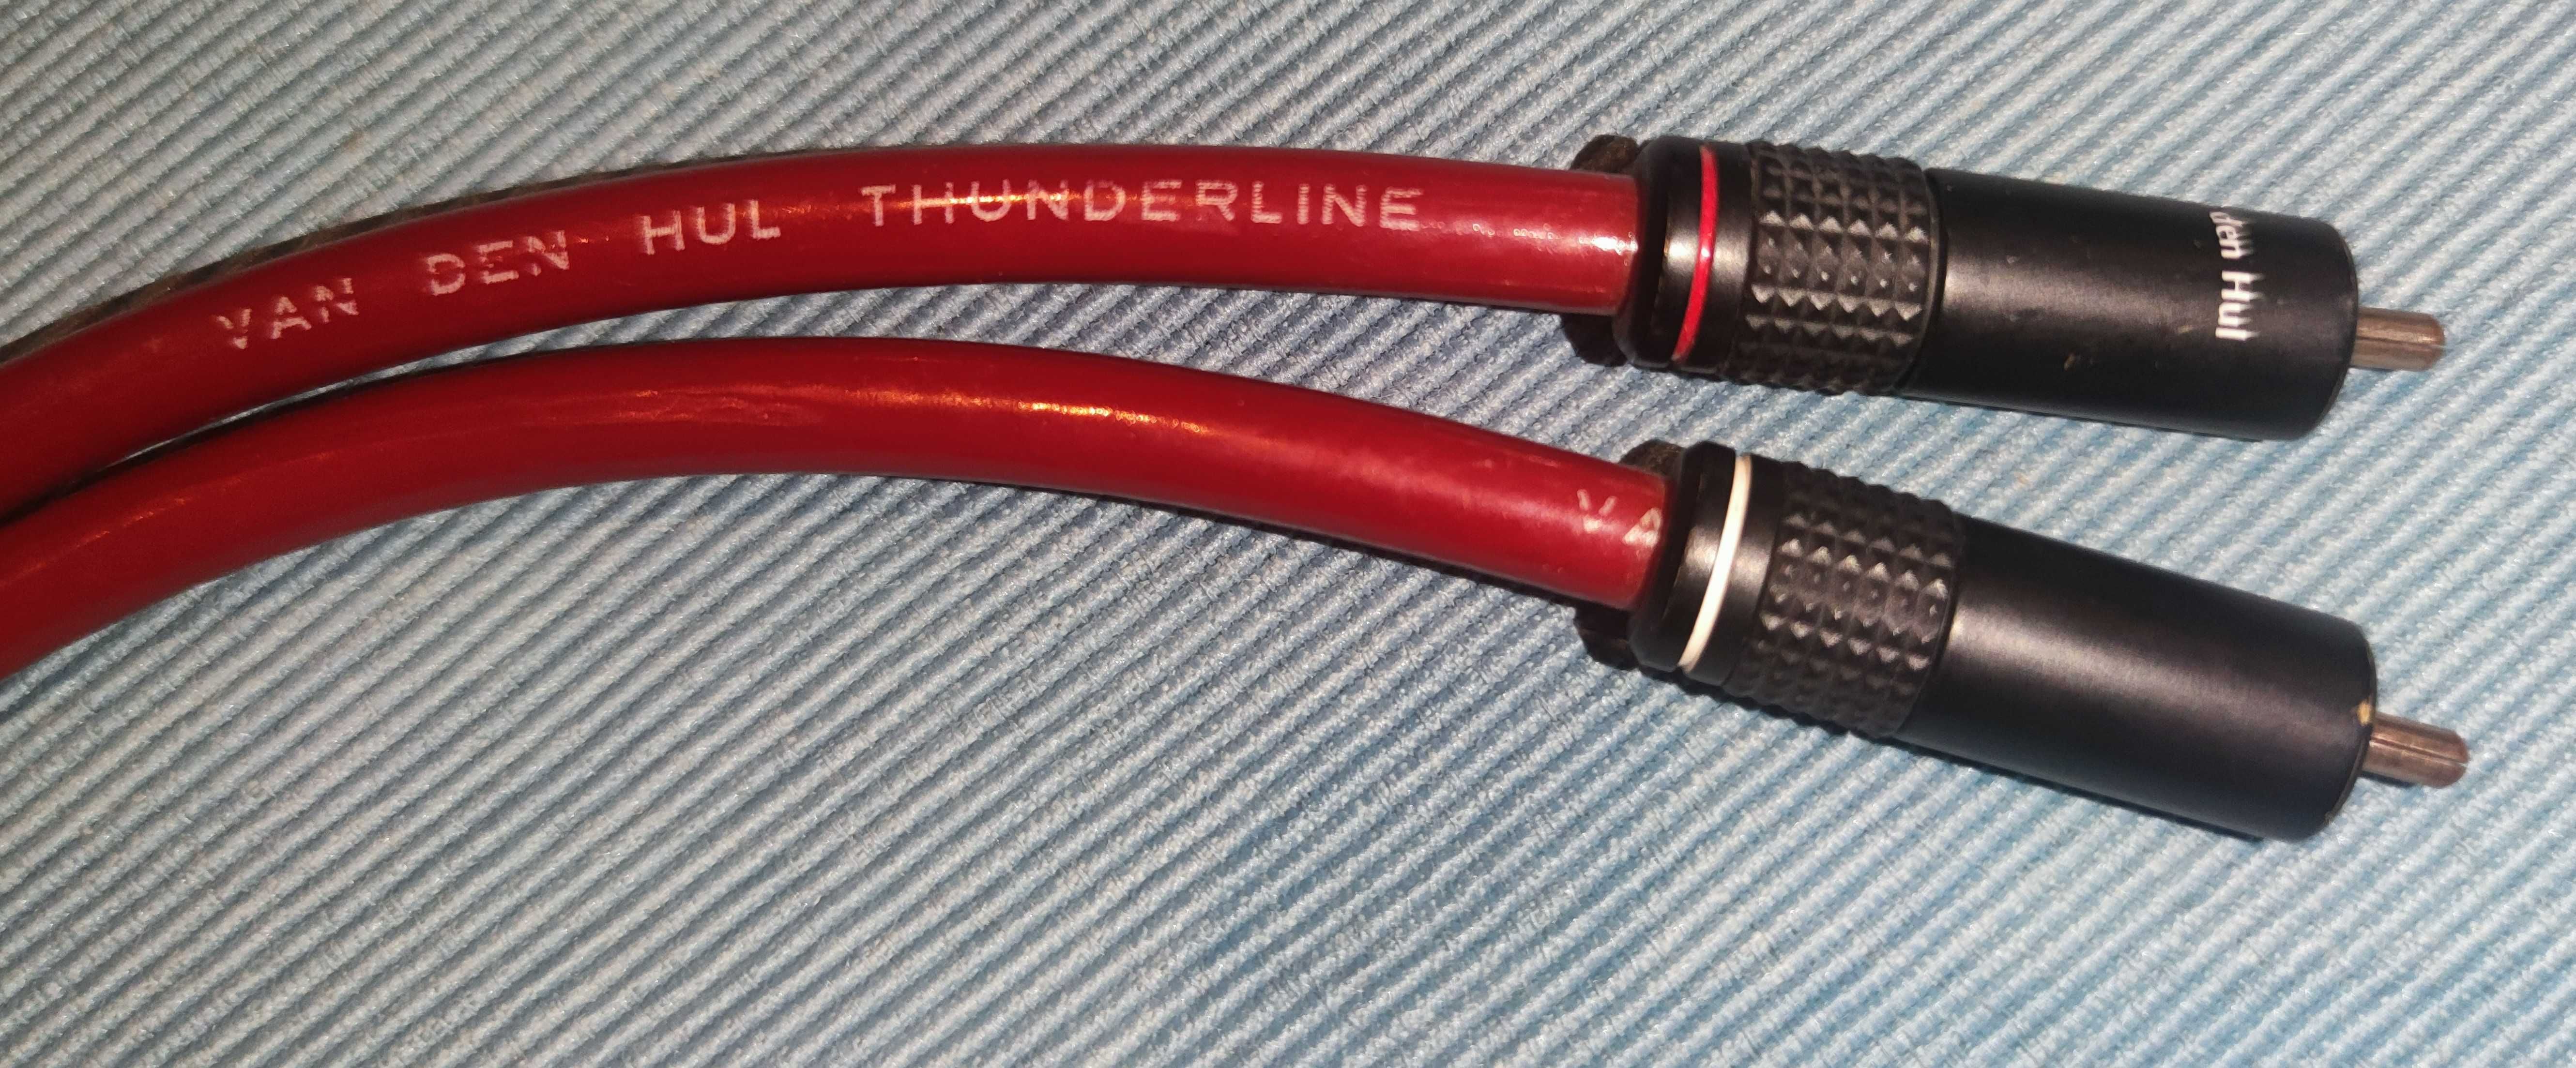 VAN DEN HUL Thunderline - interconnect RCA